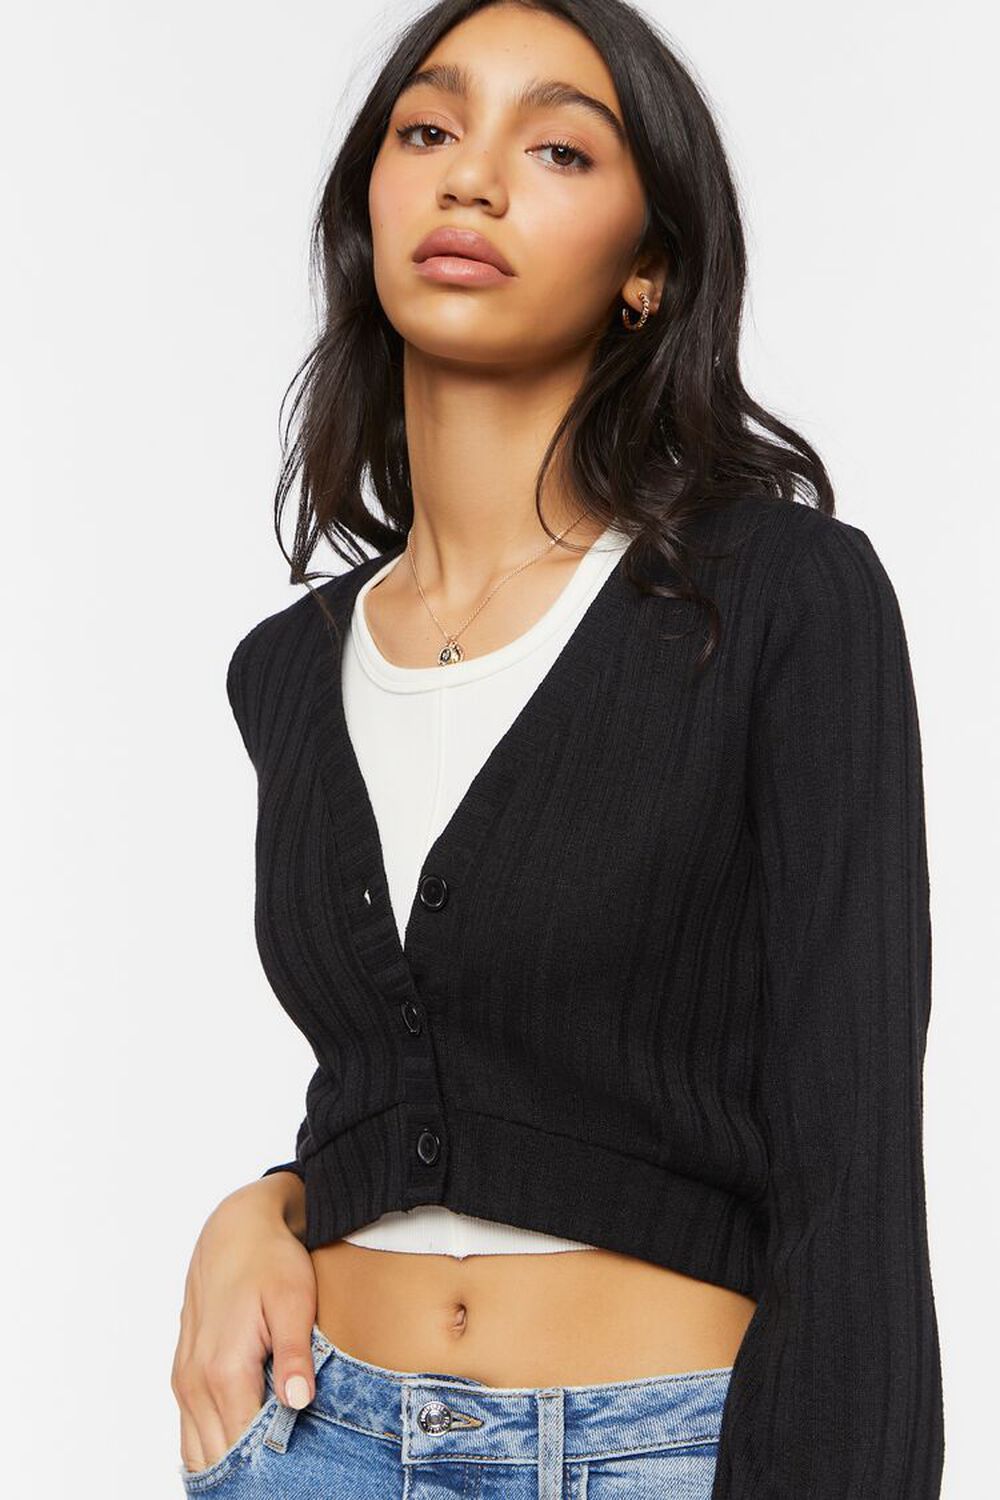 BLACK Cropped Cardigan Sweater, image 1